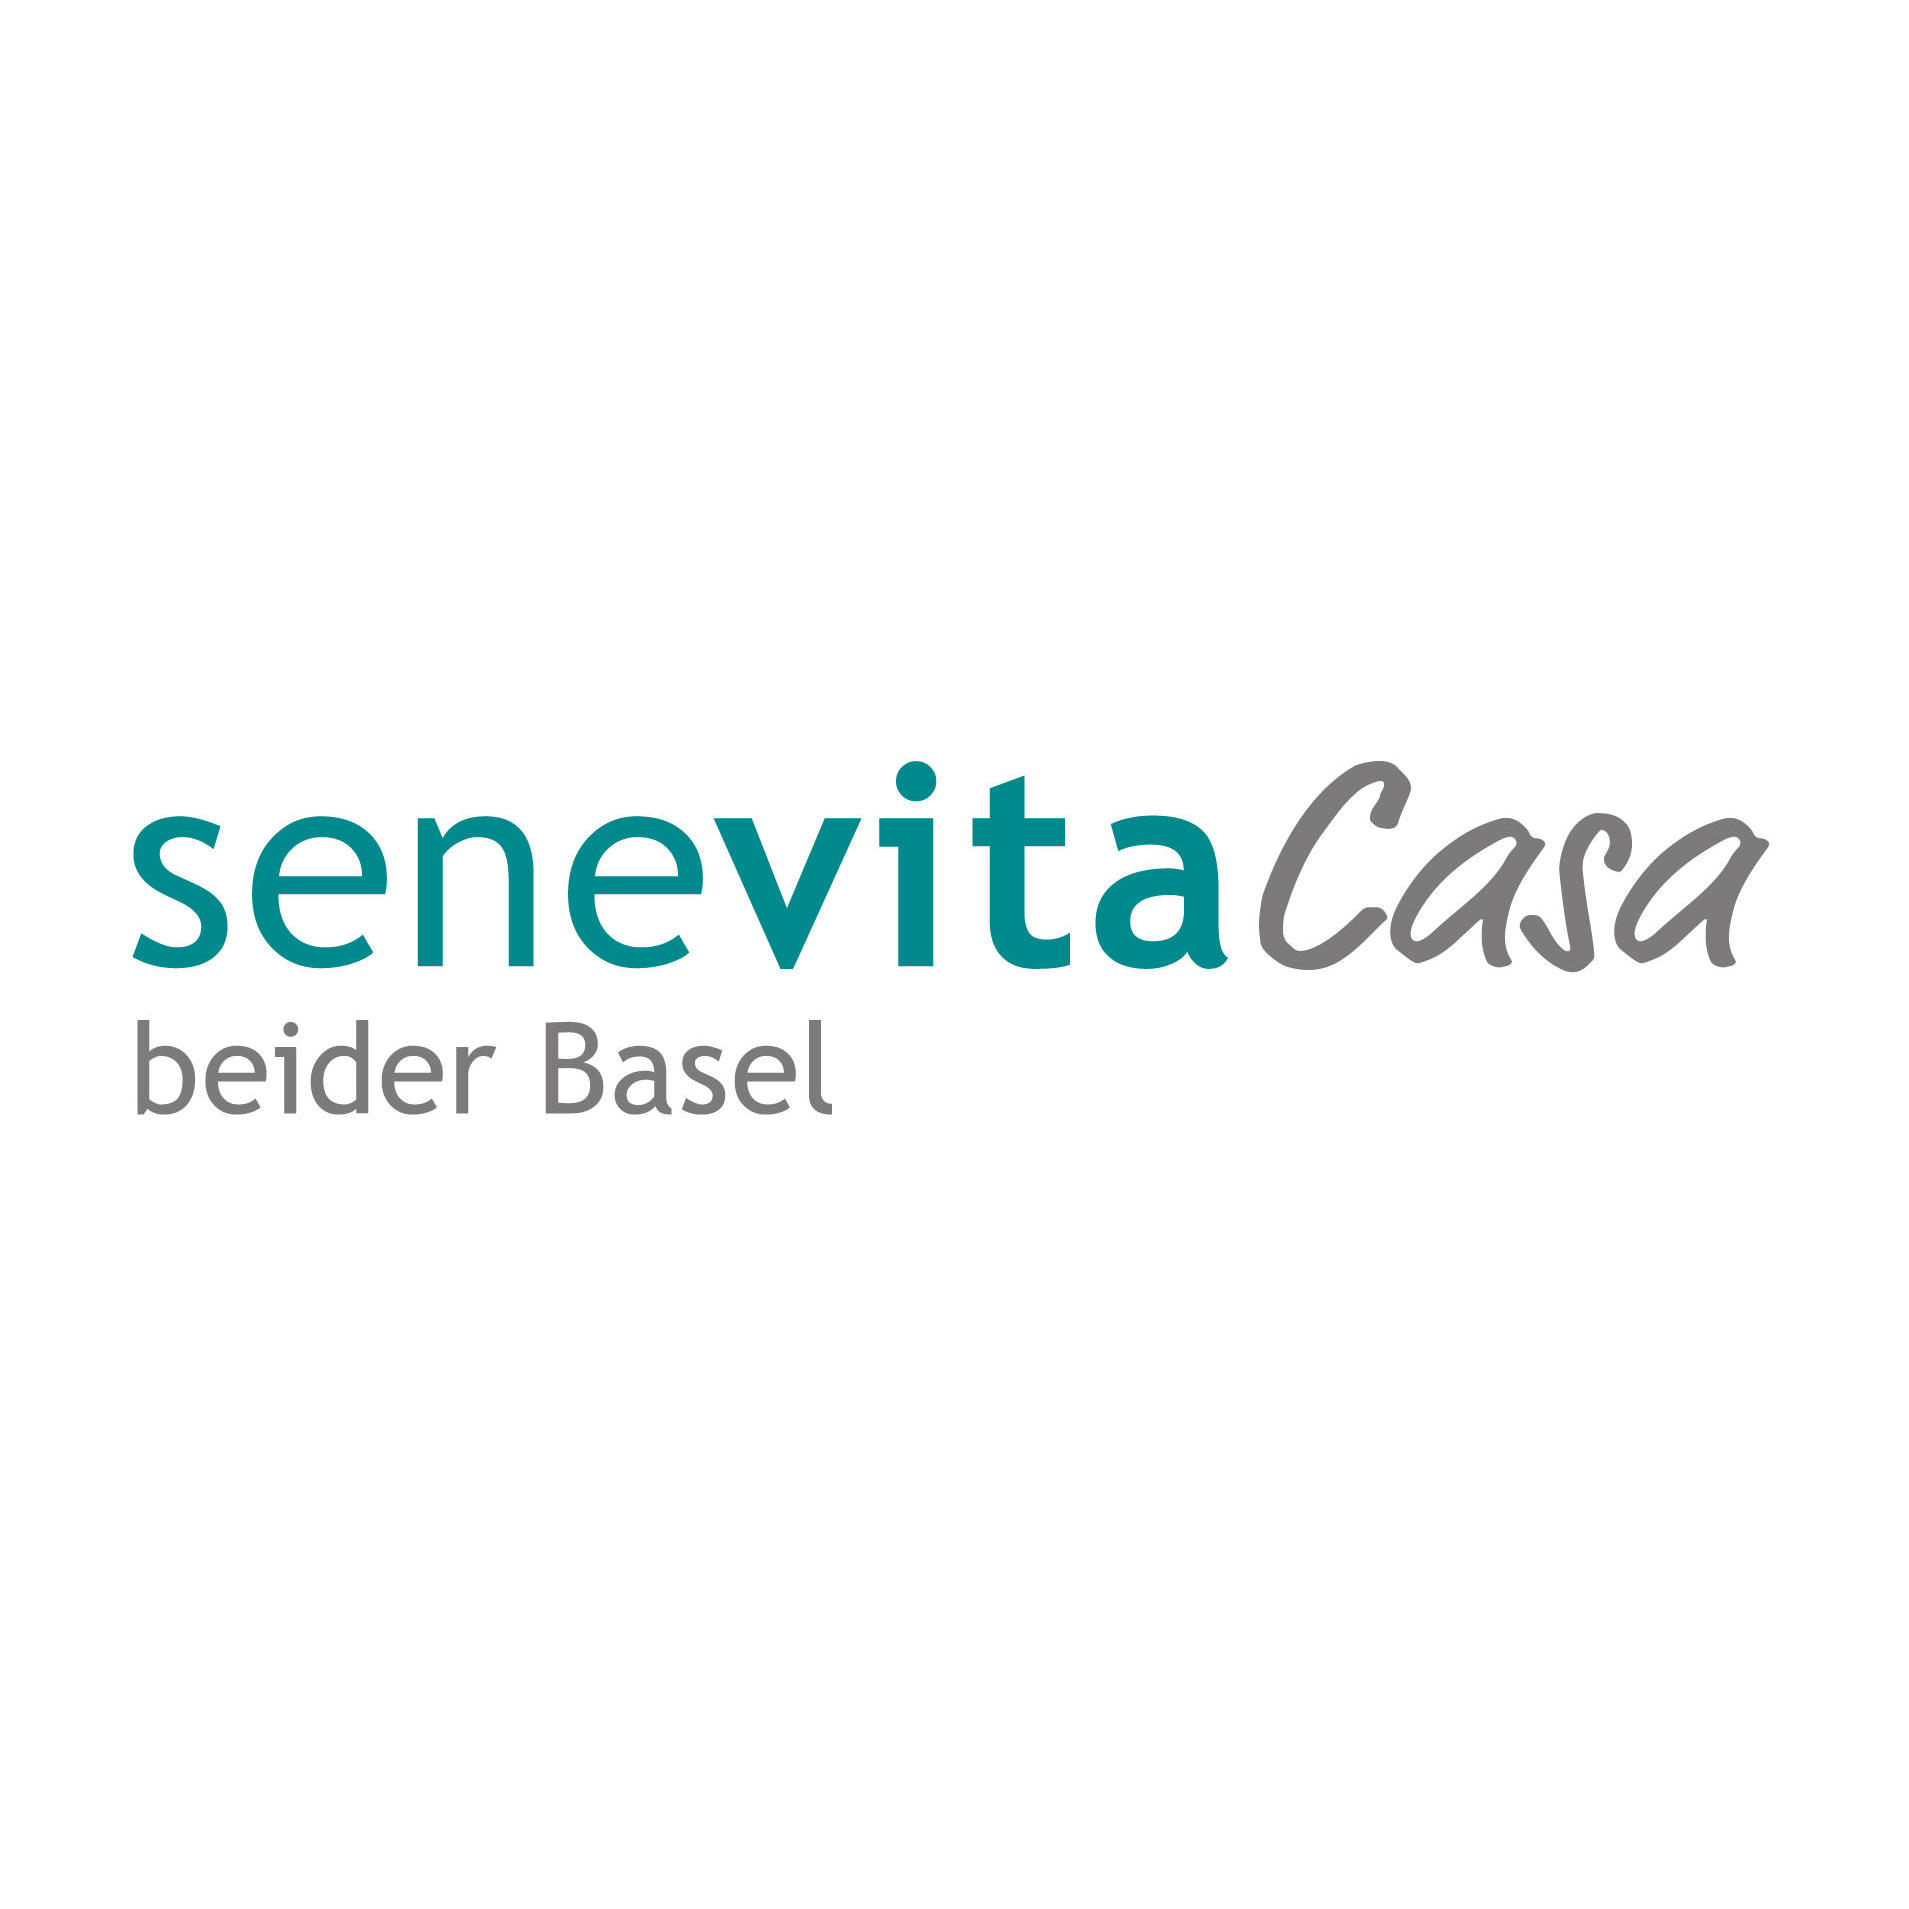 Senevita Casa beider Basel Logo